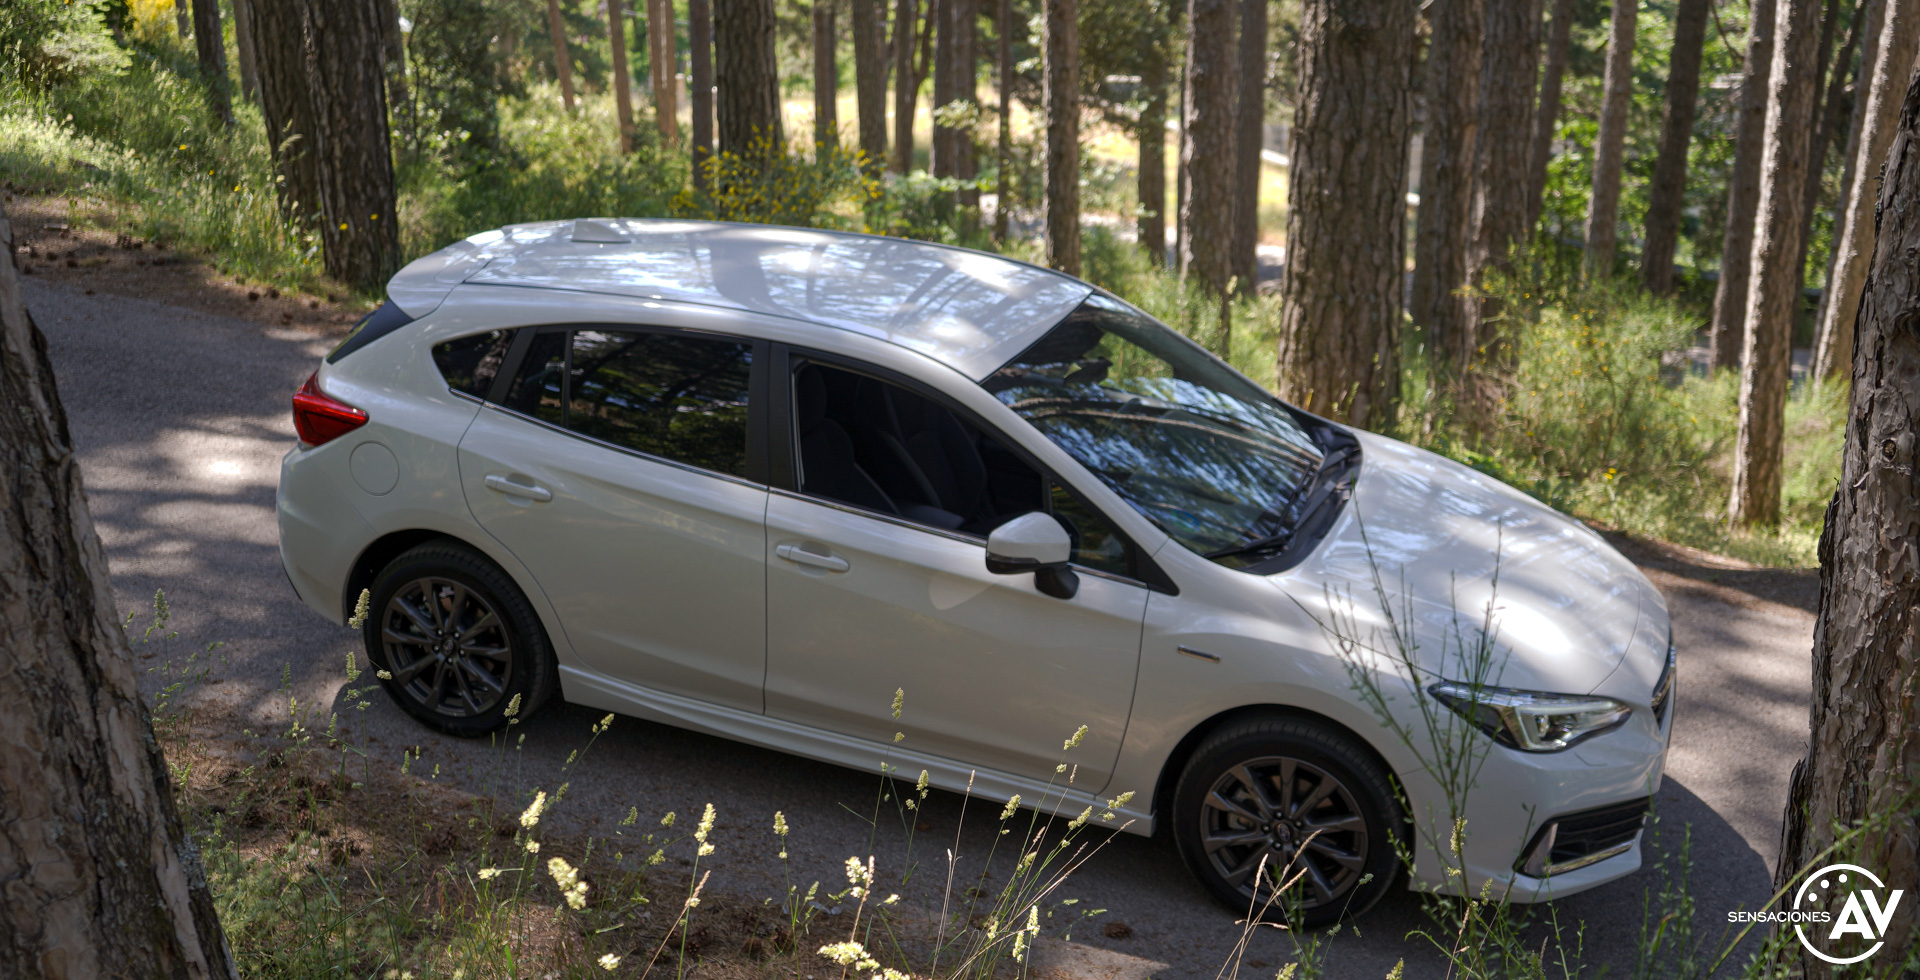 Lateral derecho paisaje Subaru Impreza - Prueba Subaru Impreza ecoHybrid 2021: Una leyenda electrificada